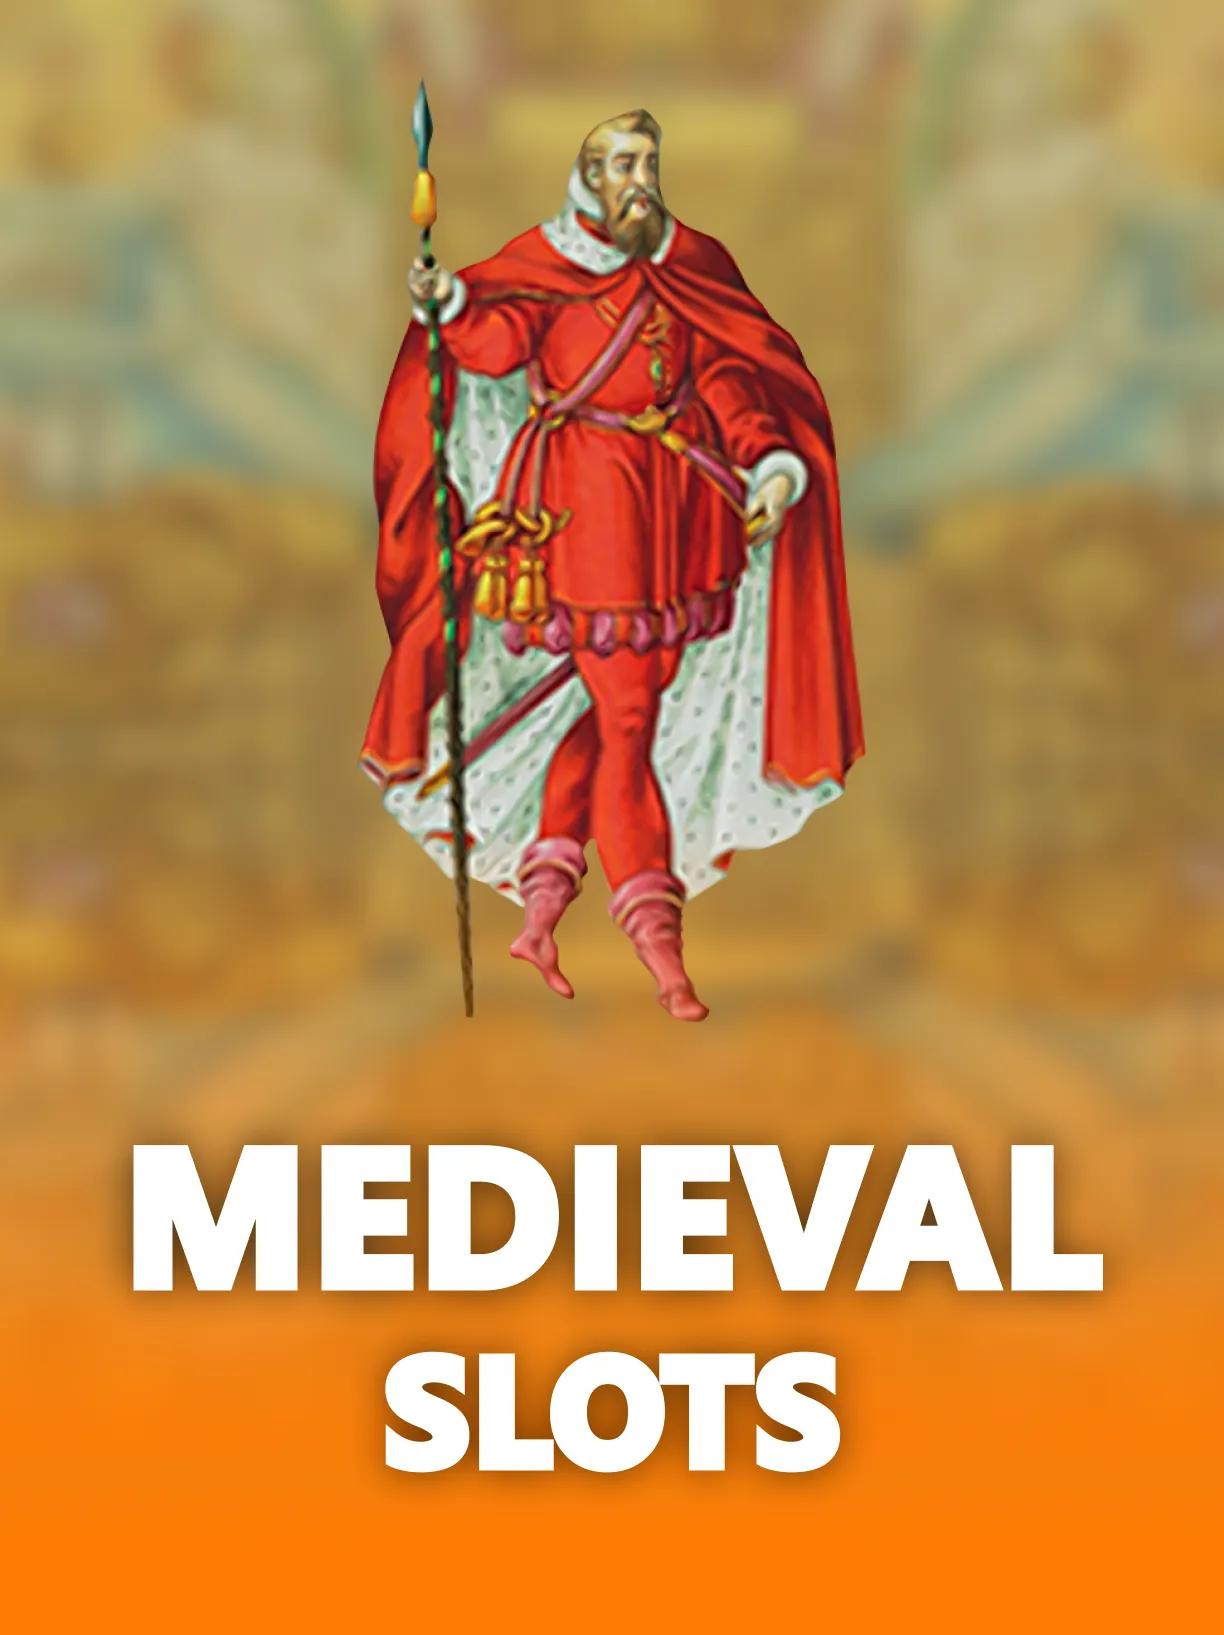 ug_Medieval_Slots_square.webp